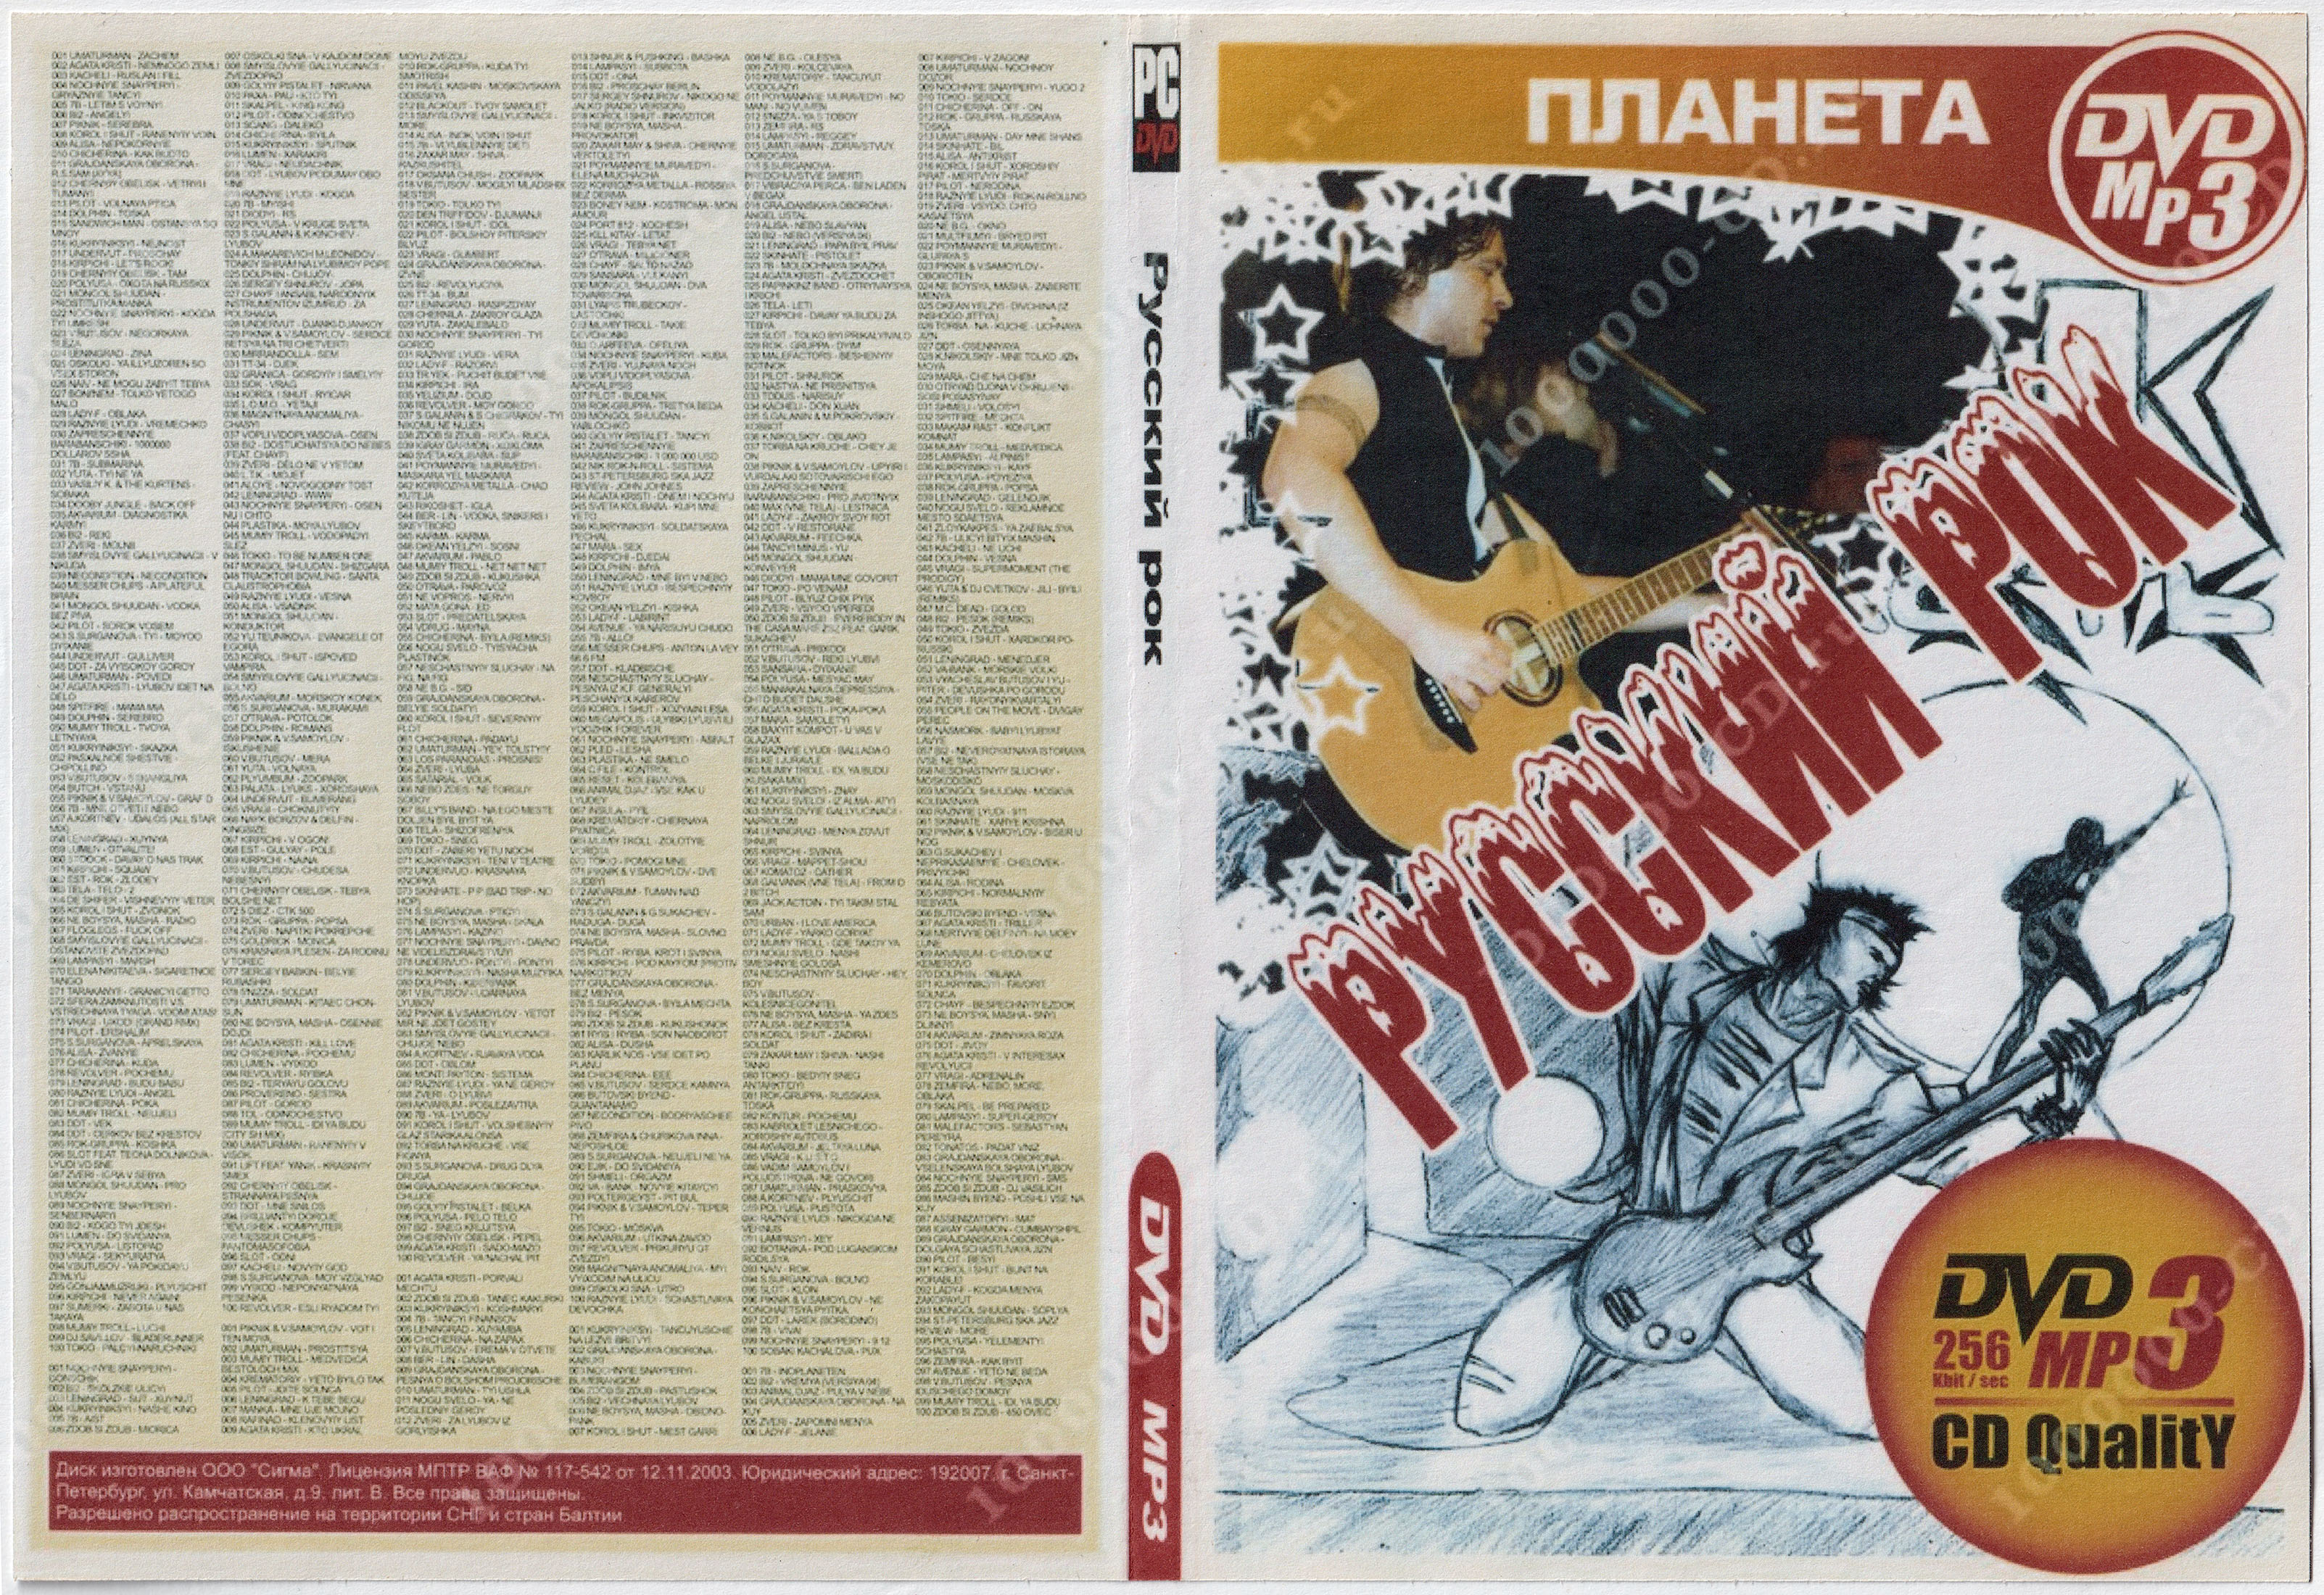 Сборник рока мп3. Диск русский рок. Рок диски сборники. DVD диск русский рок. Компакт диск русский рок.